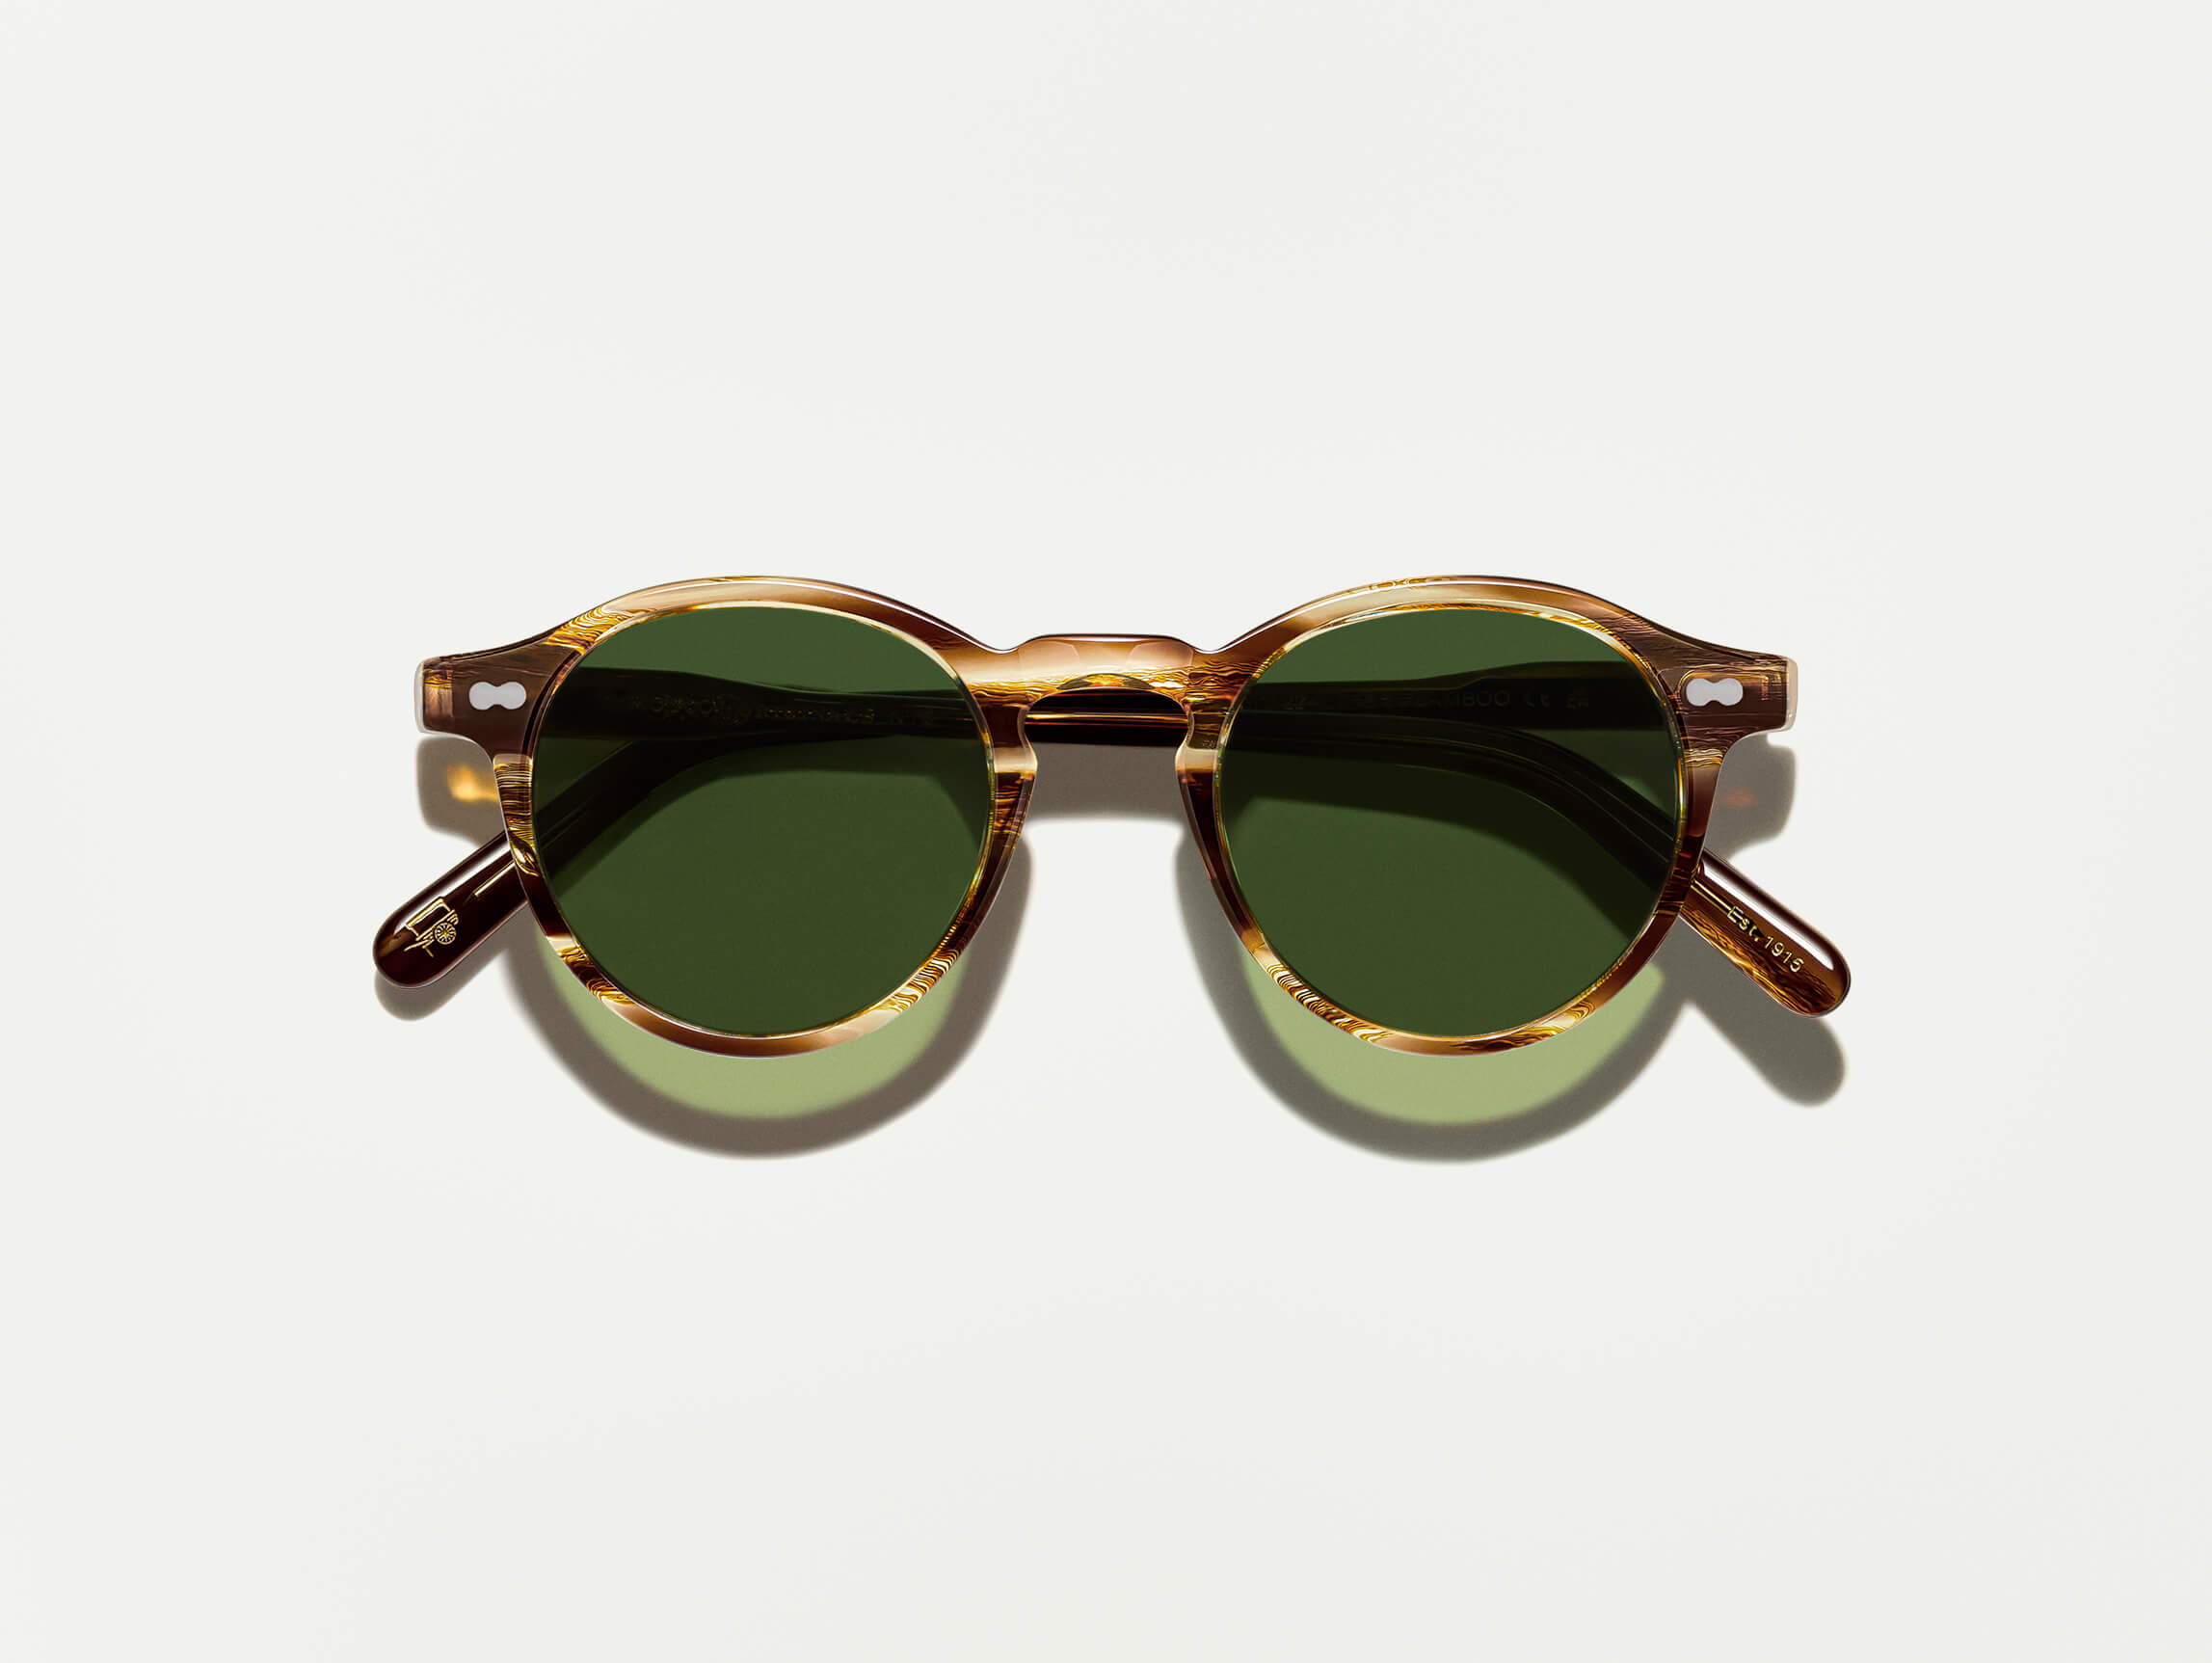 Aggregate more than 224 buy bamboo sunglasses super hot